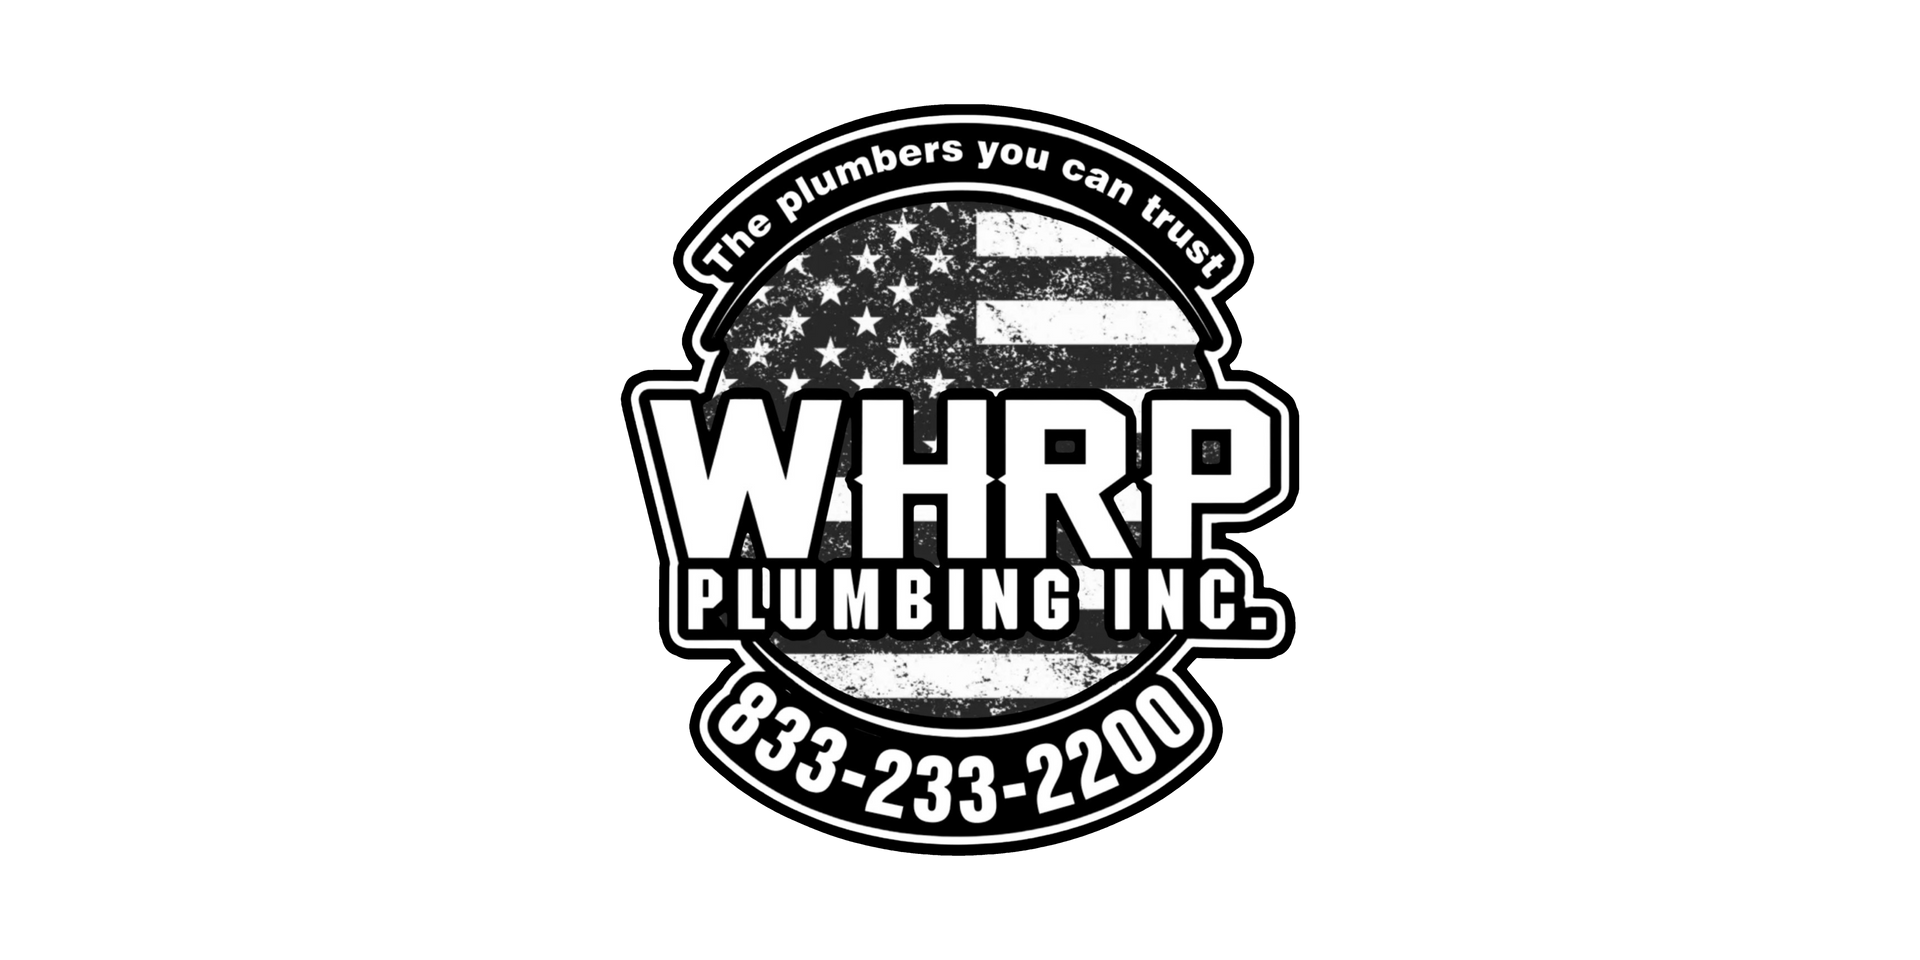 WHRP Plumbing